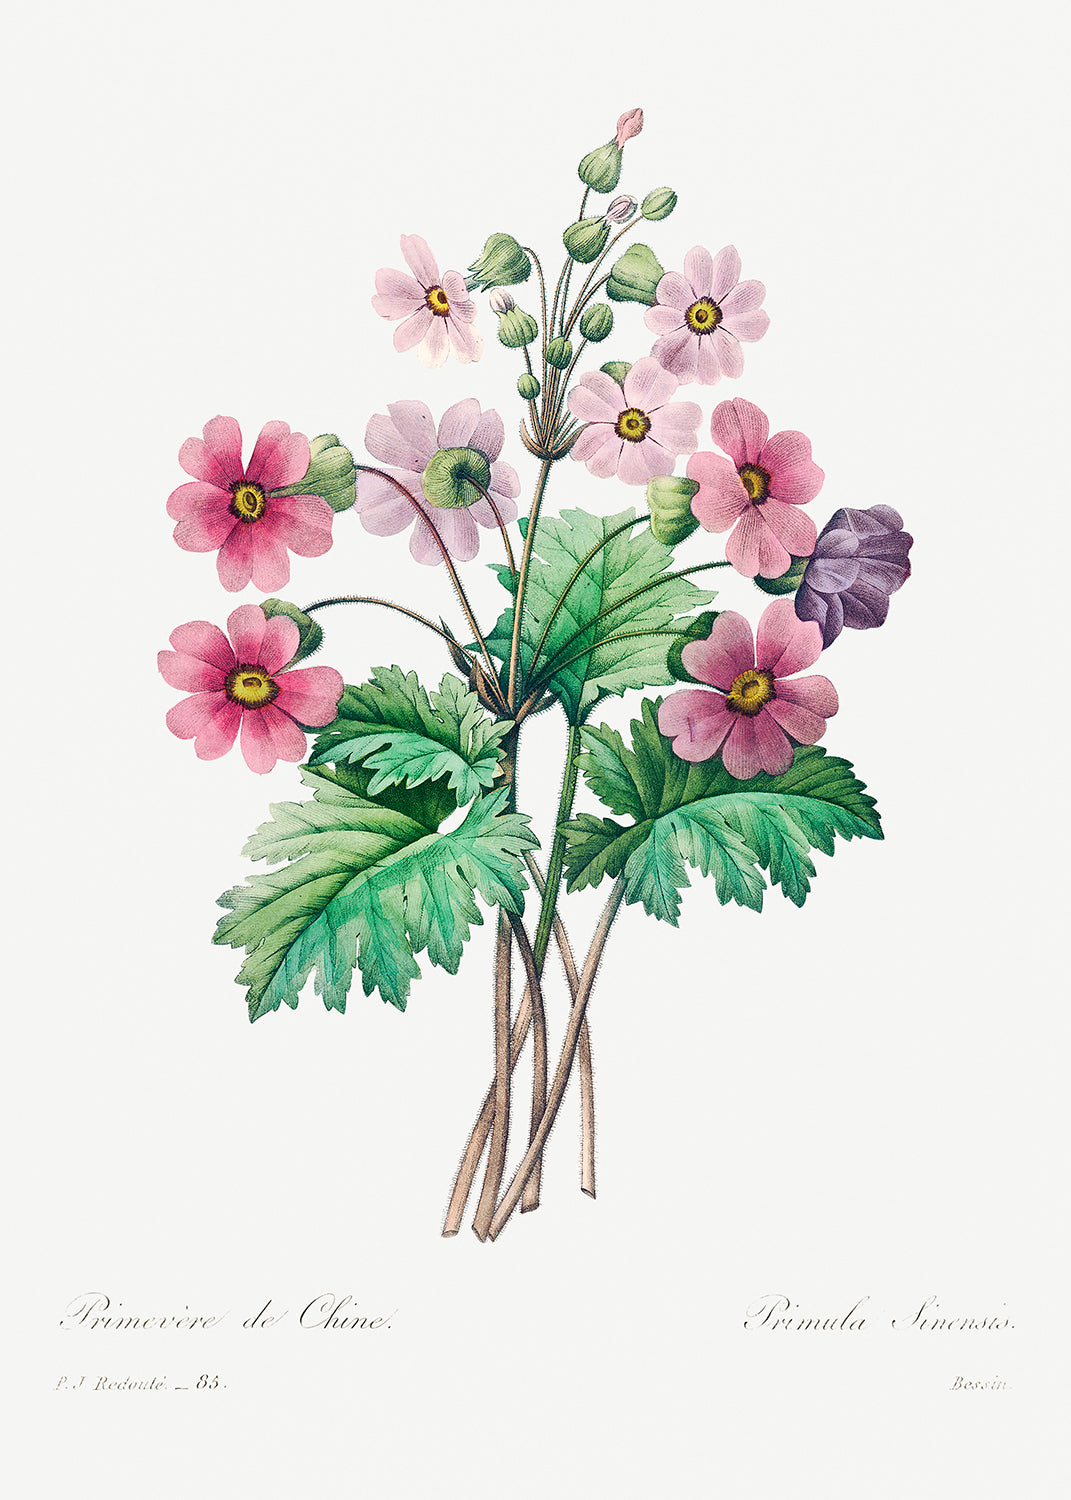 Botanical Plant Print - The Chinese primrose by Pierre Joseph Redoute